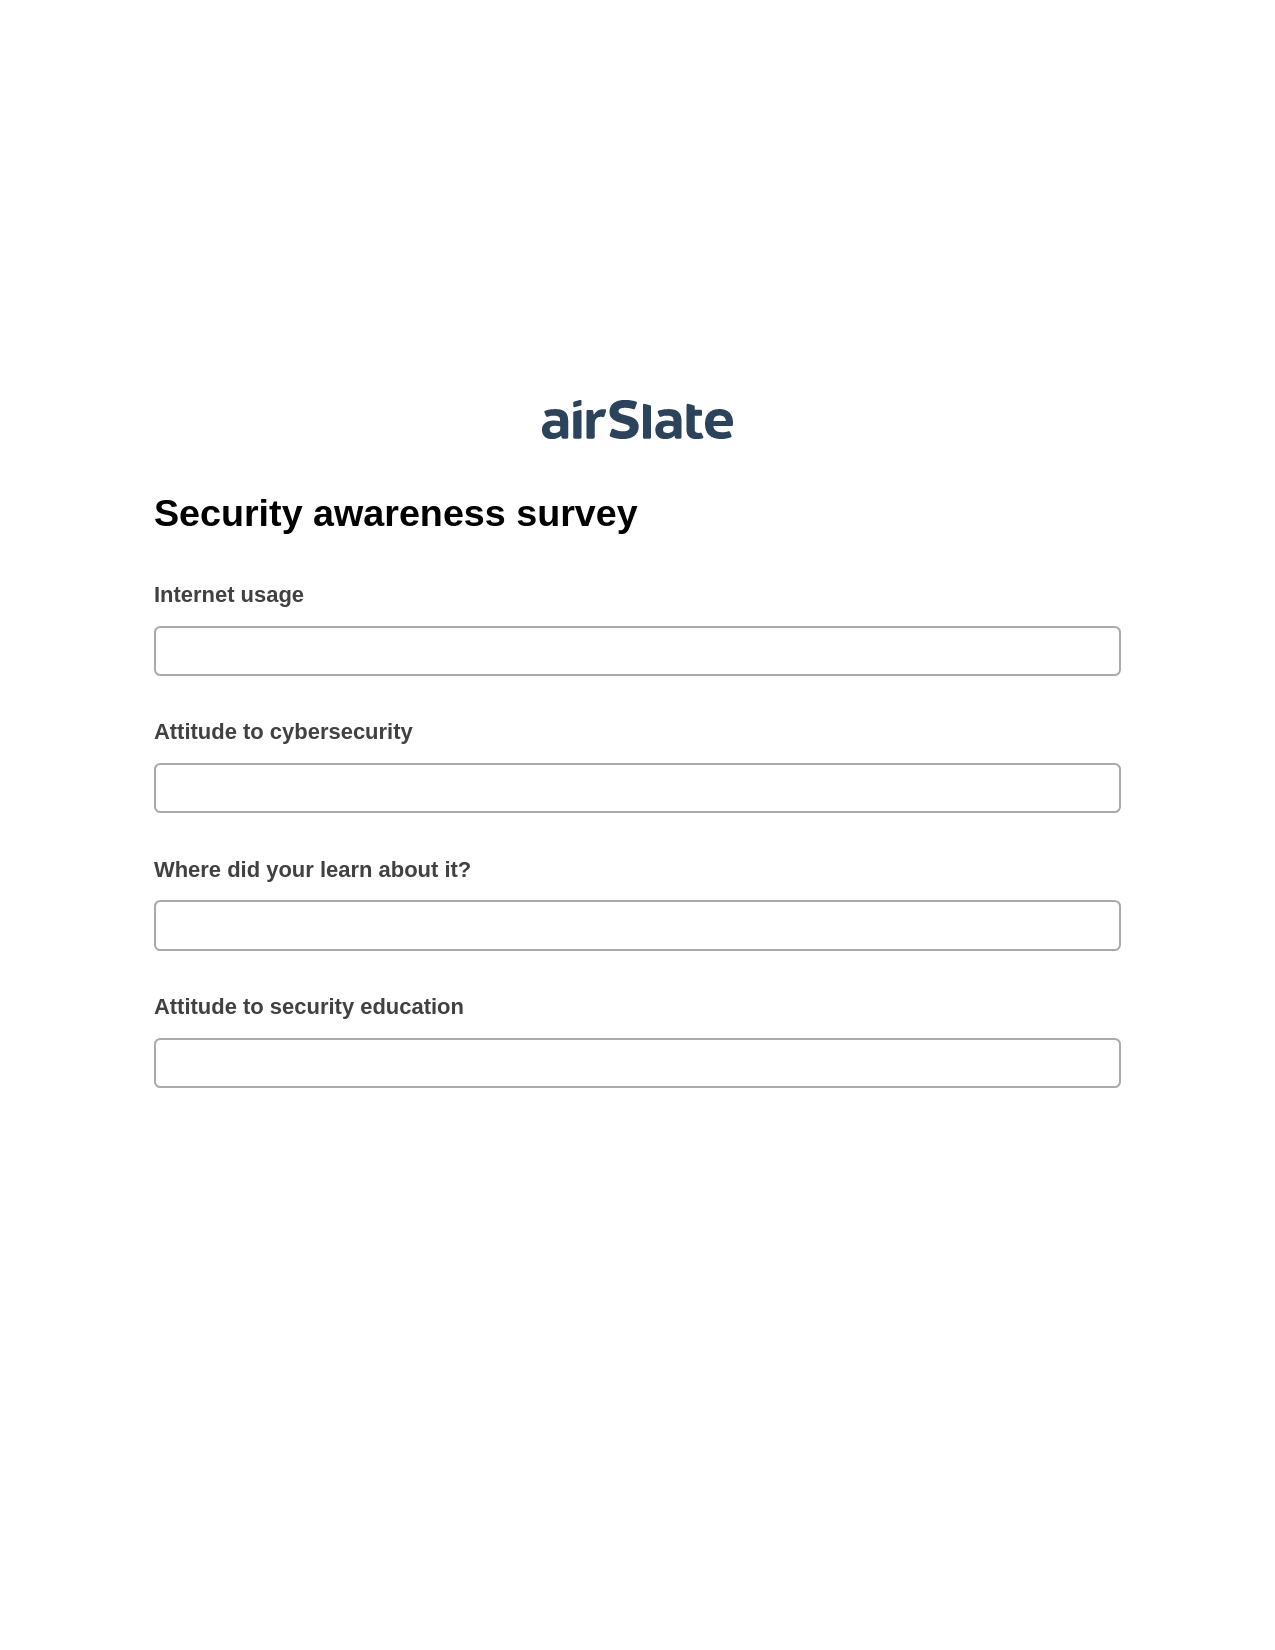 Security awareness survey Pre-fill from NetSuite Records Bot, Google Calendar Bot, Webhook Postfinish Bot